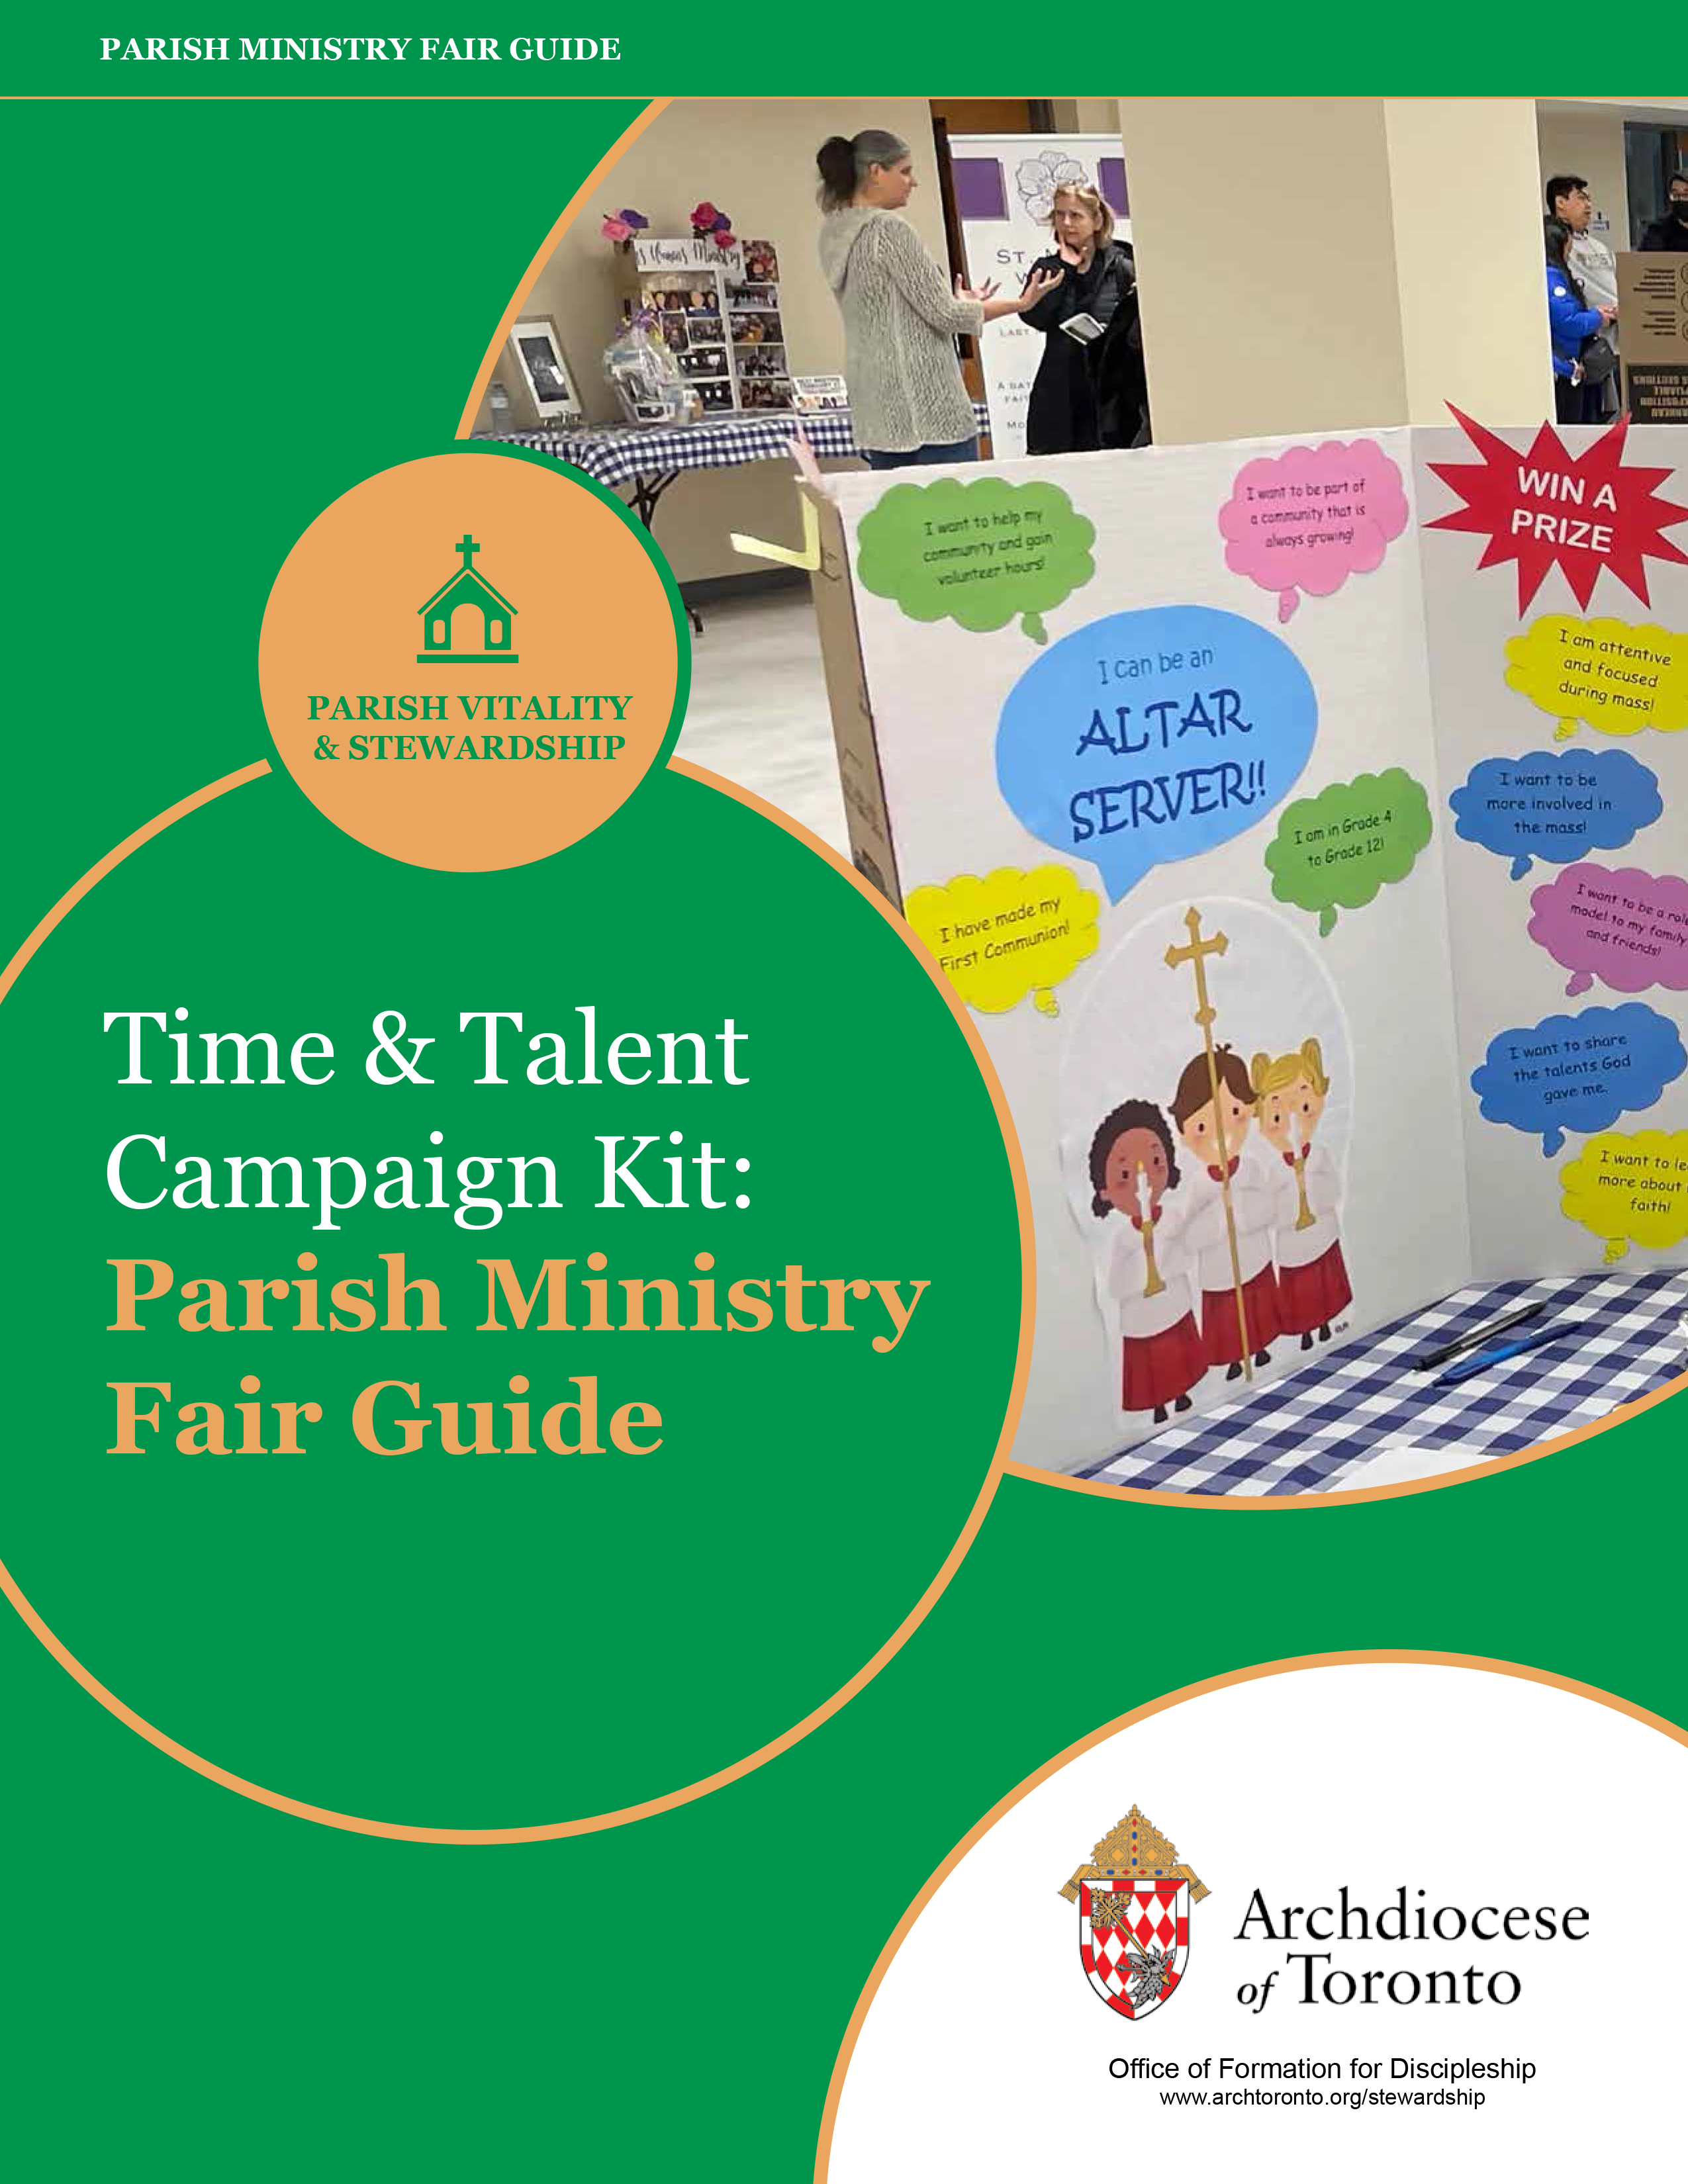 Time & Talent Campaign Kit: Parish Ministry Fair Guide